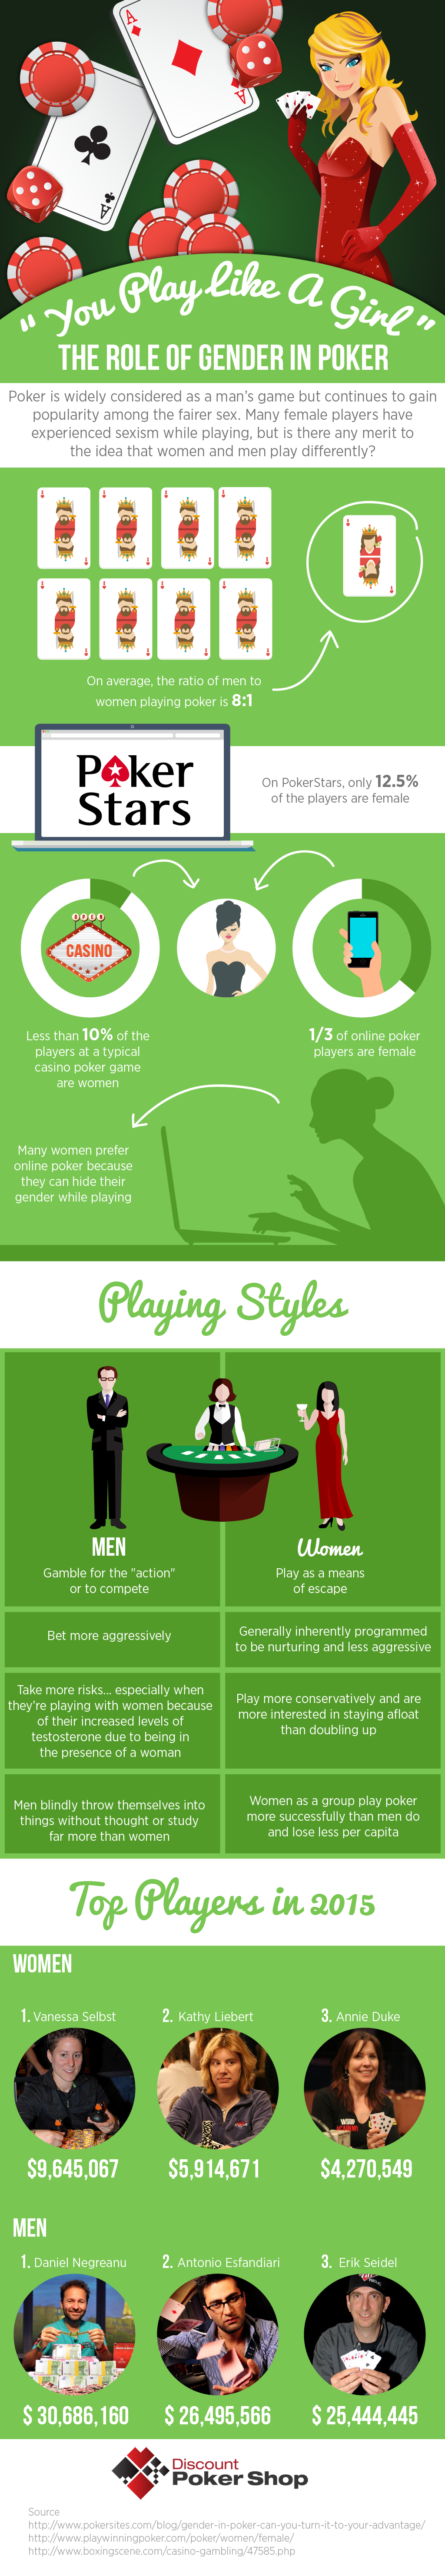 gender and poker